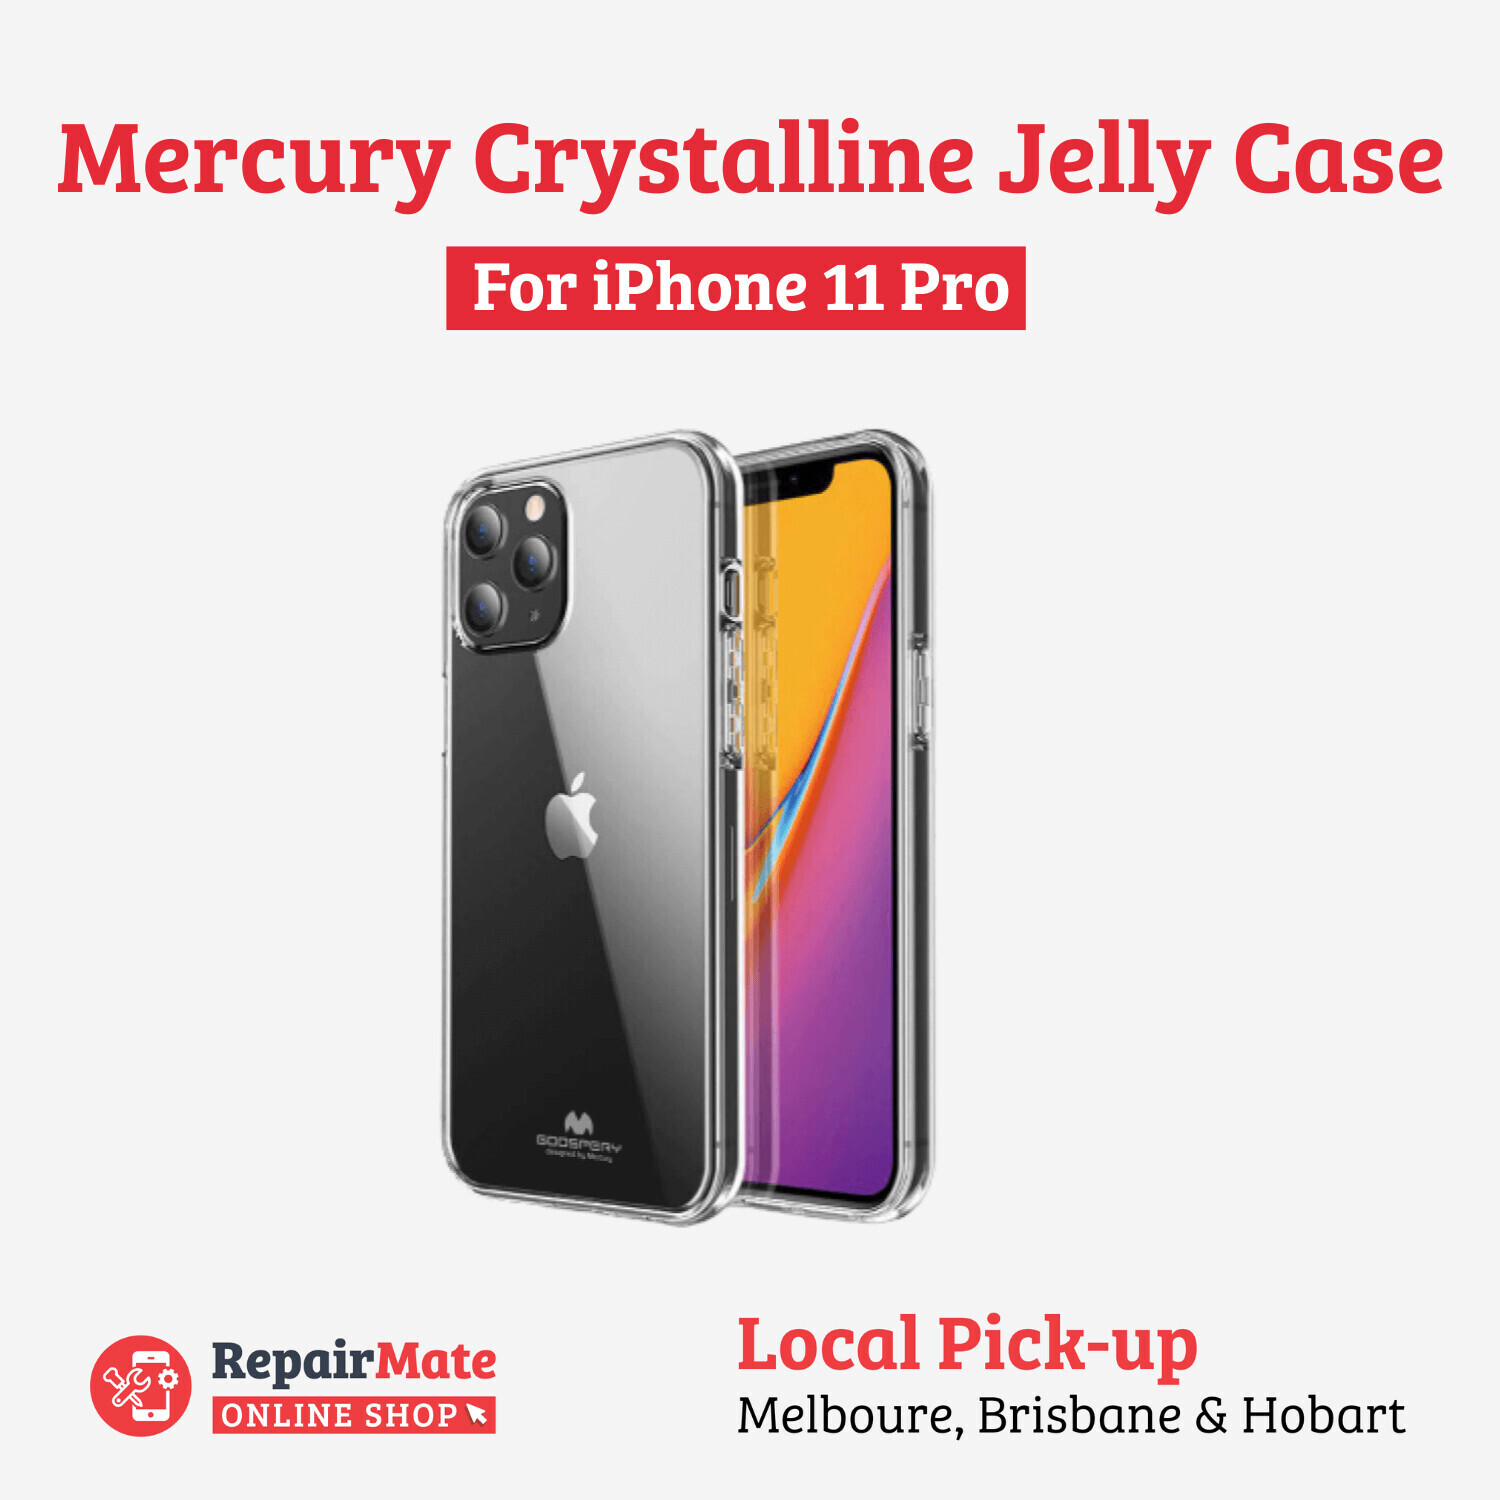 iPhone 11 Pro Mercury Crystalline Jelly Case Cover